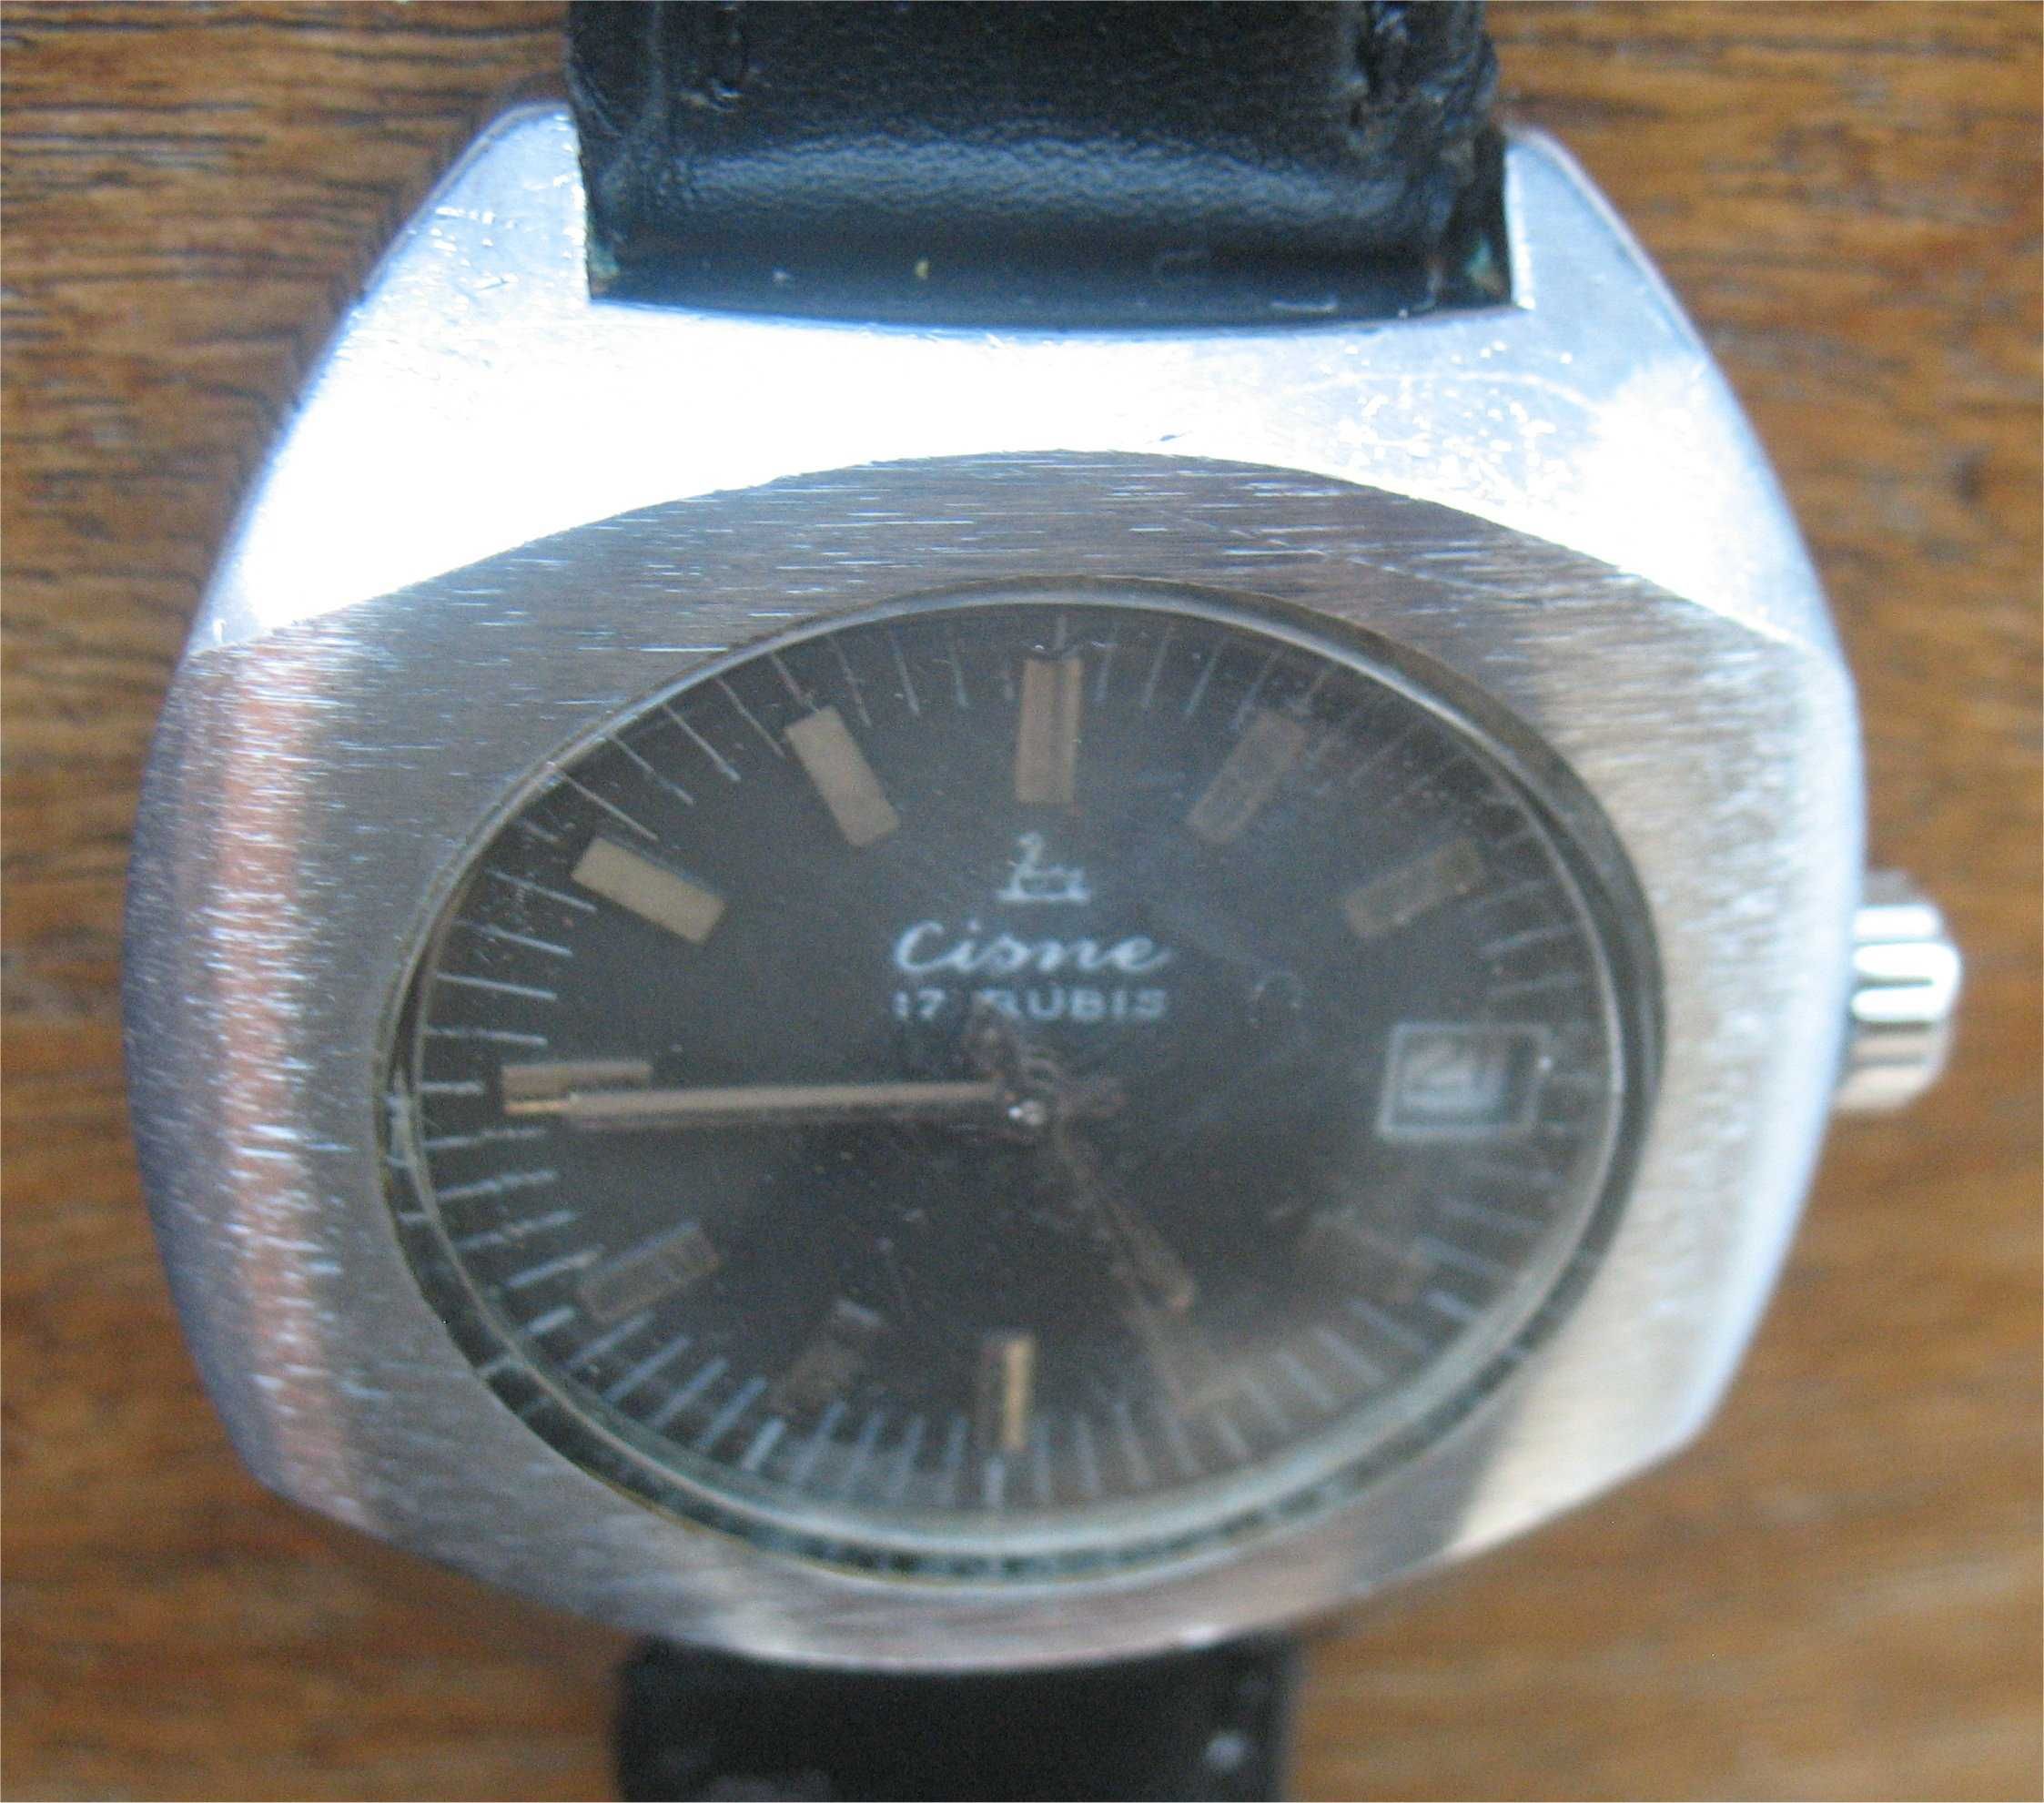 Relógio de Corda Vintage - Cisne - 17 Rubis